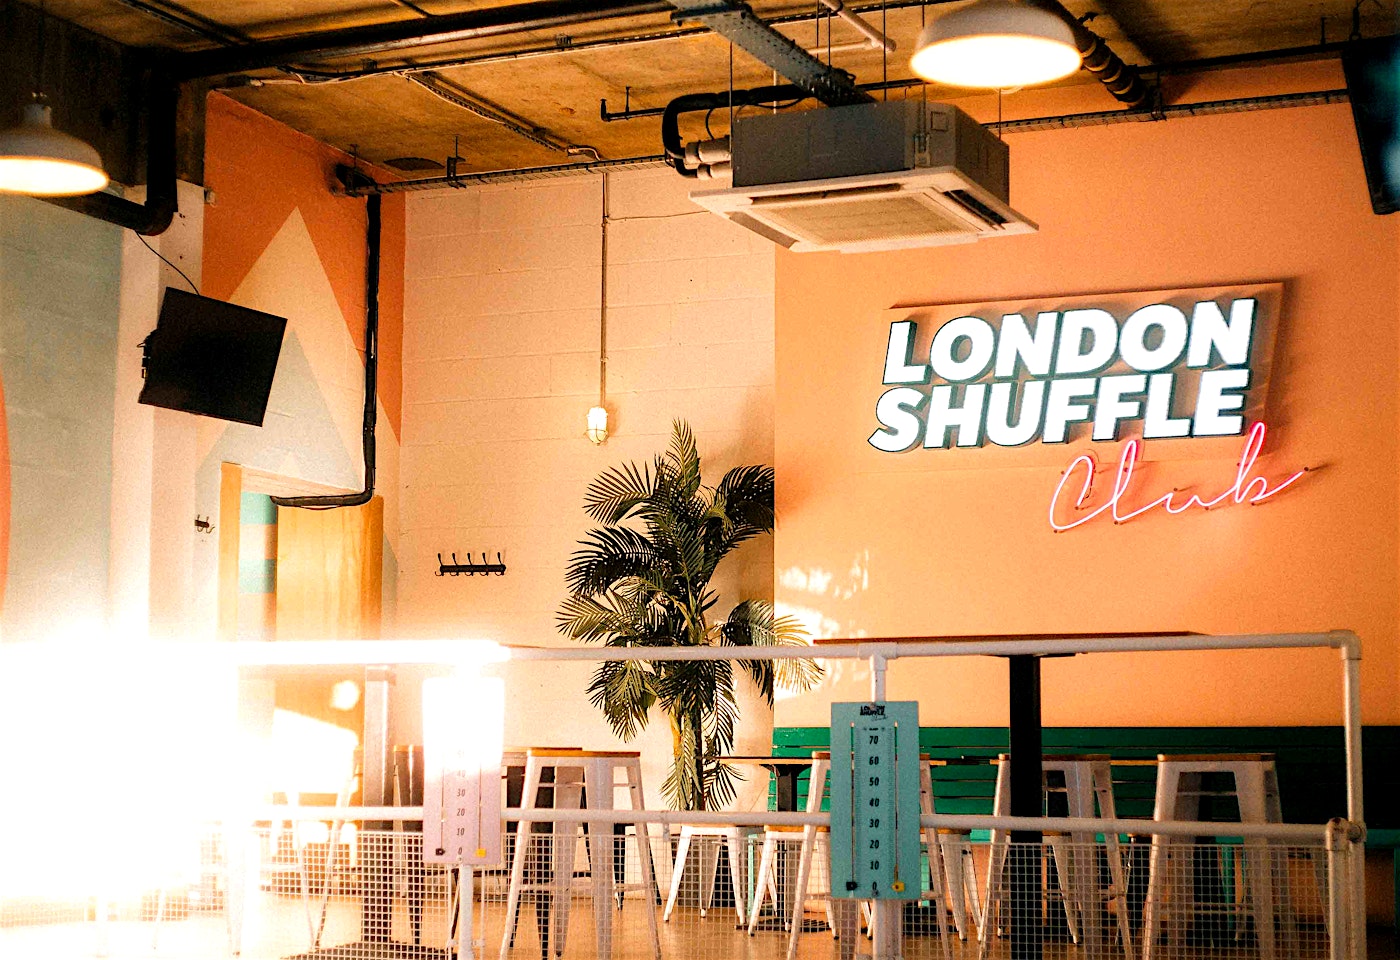 London shuffle club